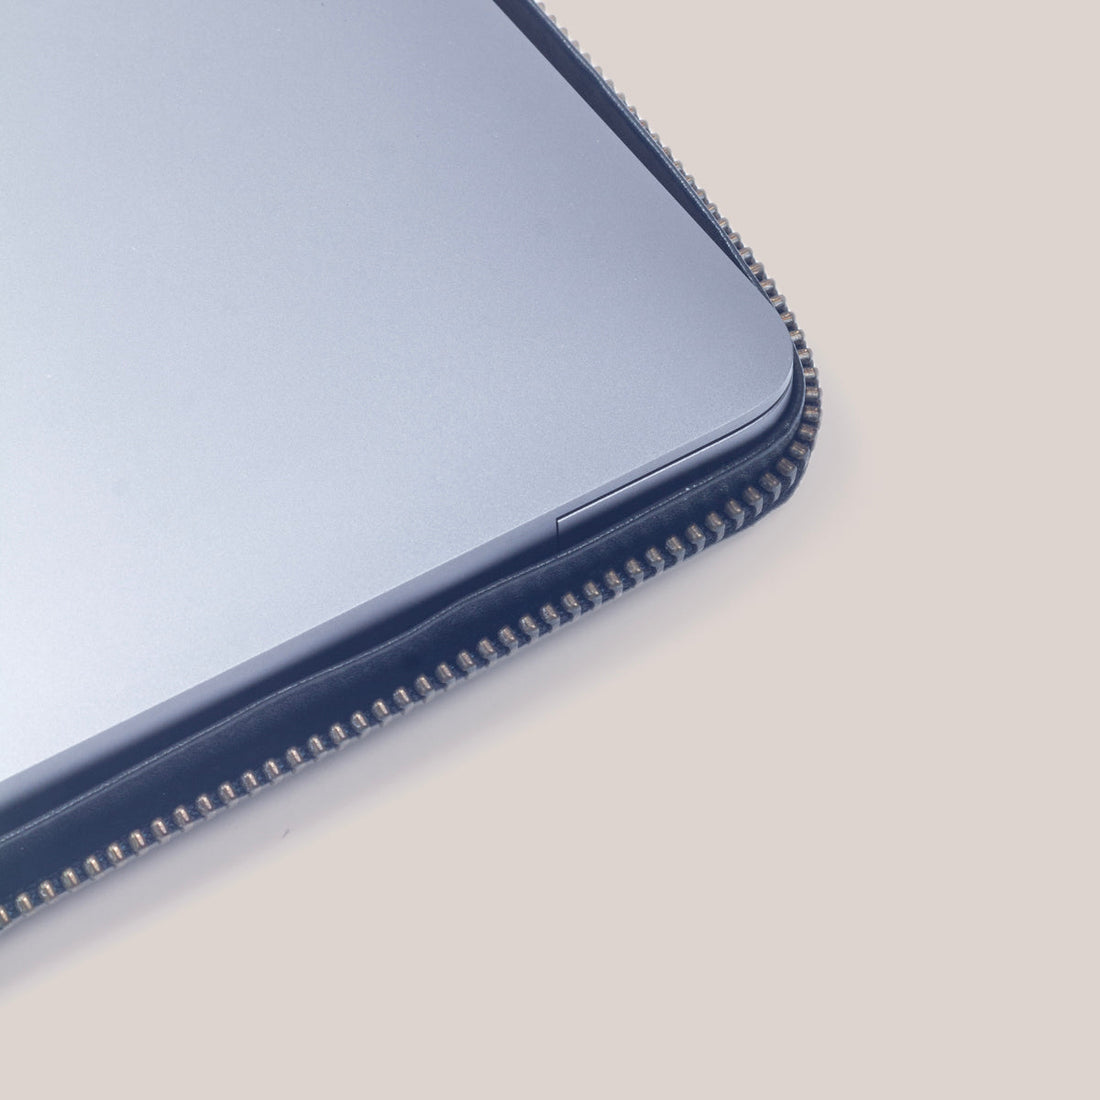 MacBook Pro 13 Zippered Laptop Case - Onyx Black